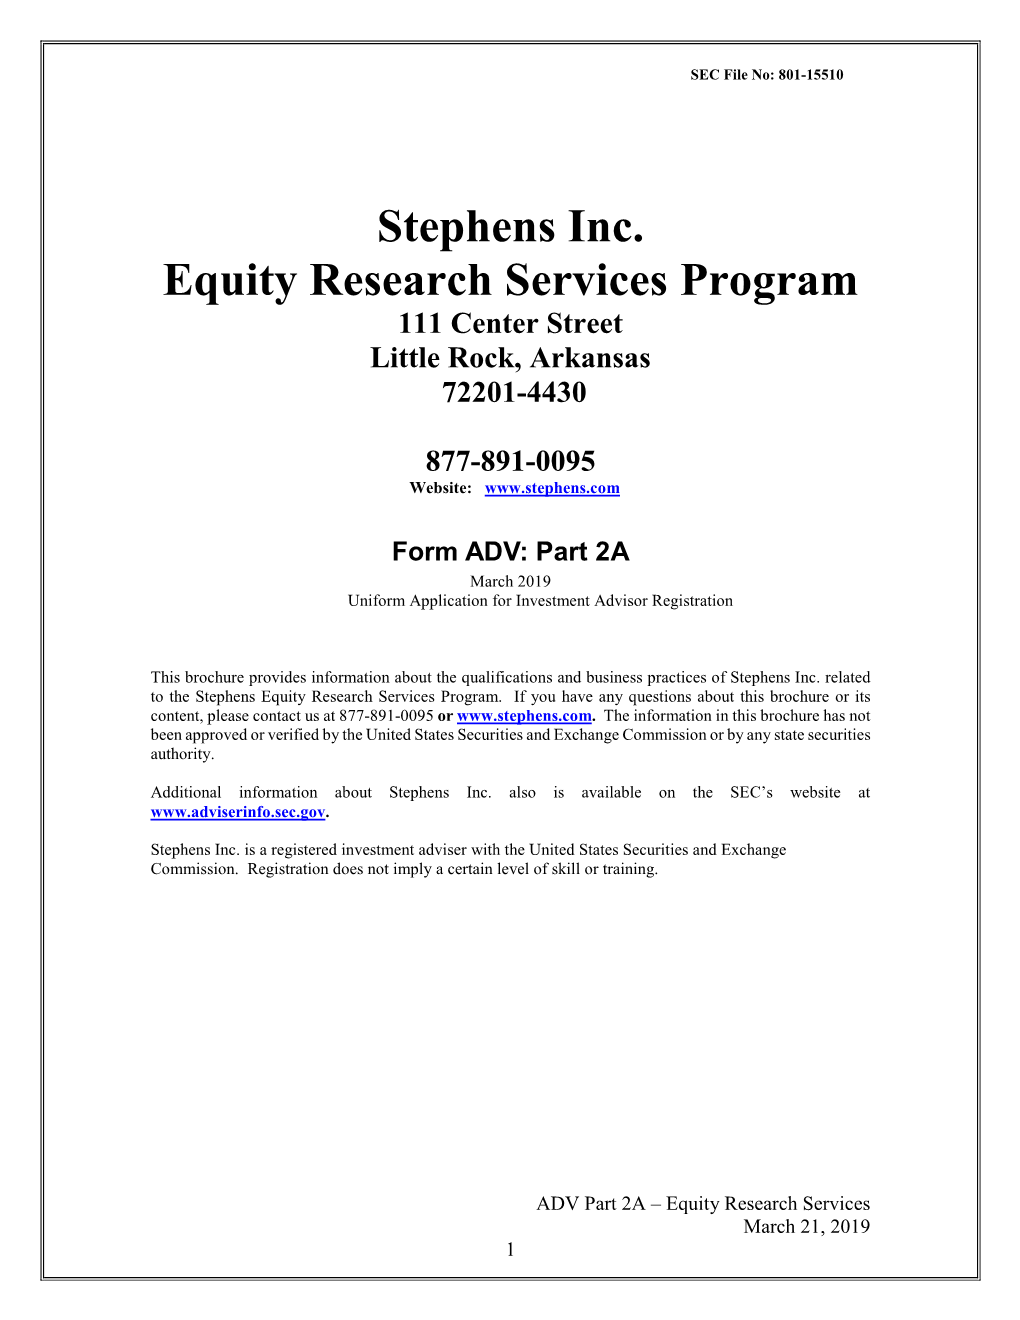 Stephens Inc. Equity Research Services Program 111 Center Street Little Rock, Arkansas 72201-4430